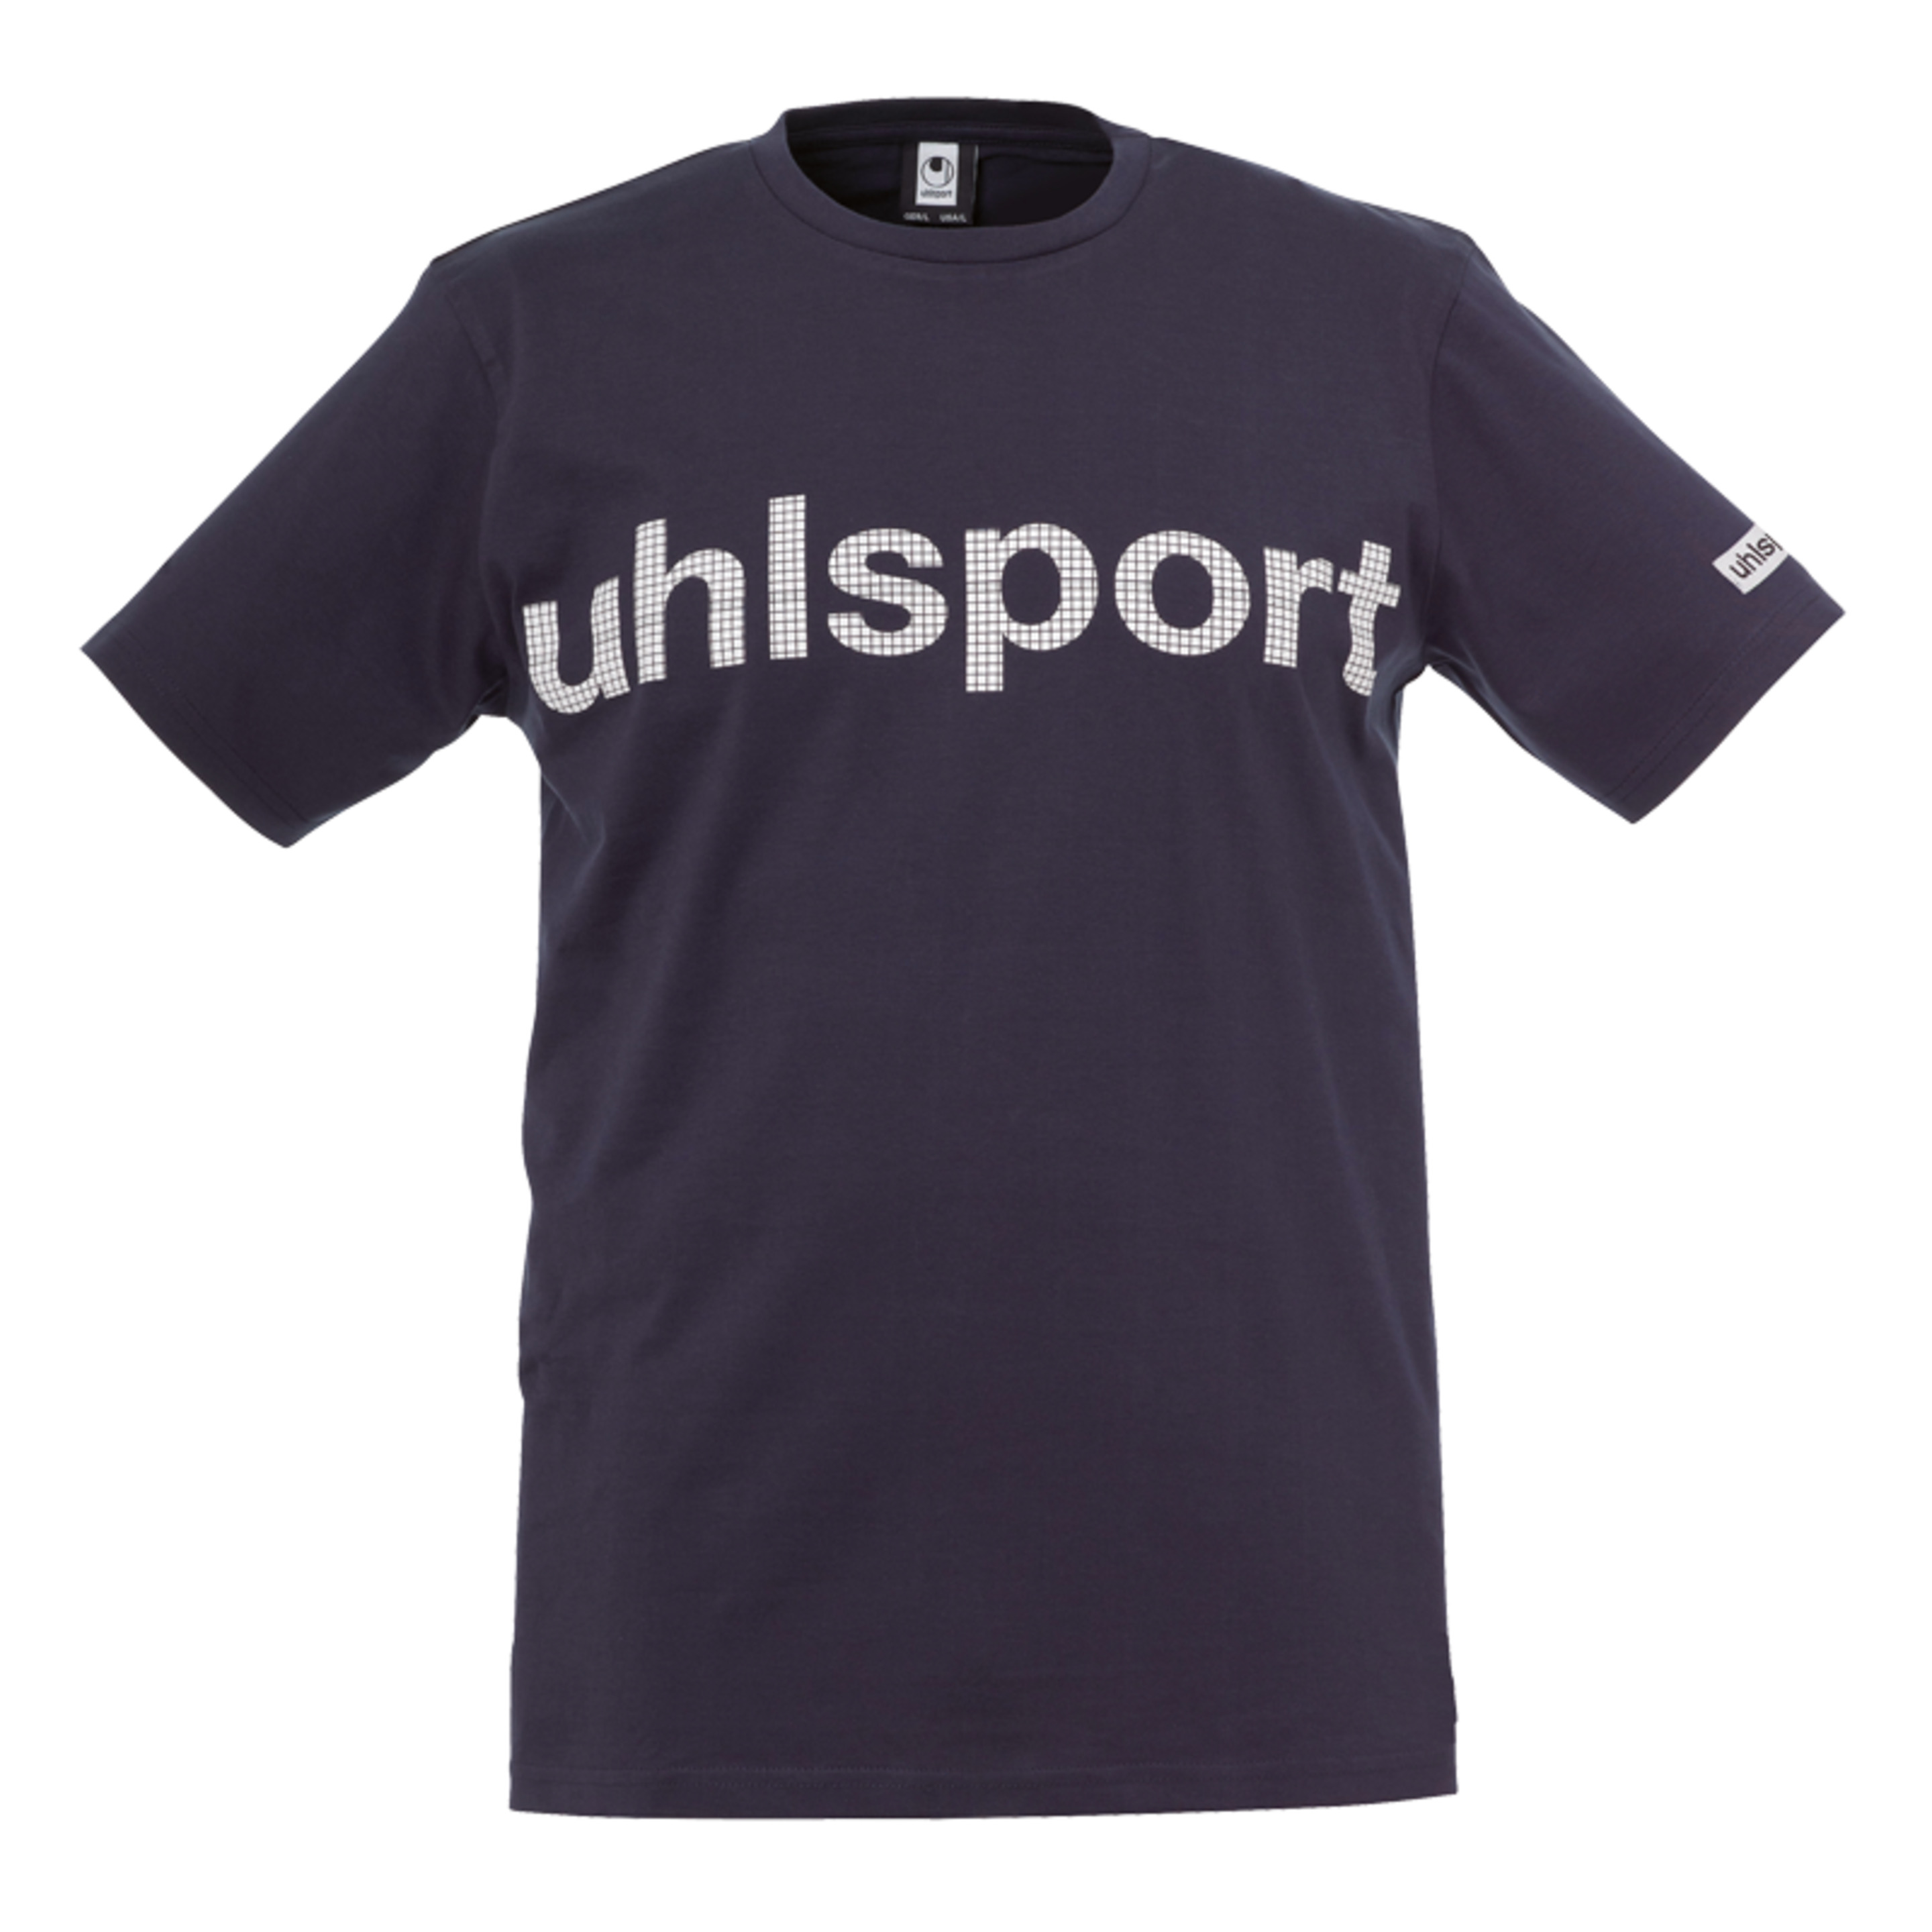 Essential Promo T-shirt Azul Marino Uhlsport - azul-marino - 